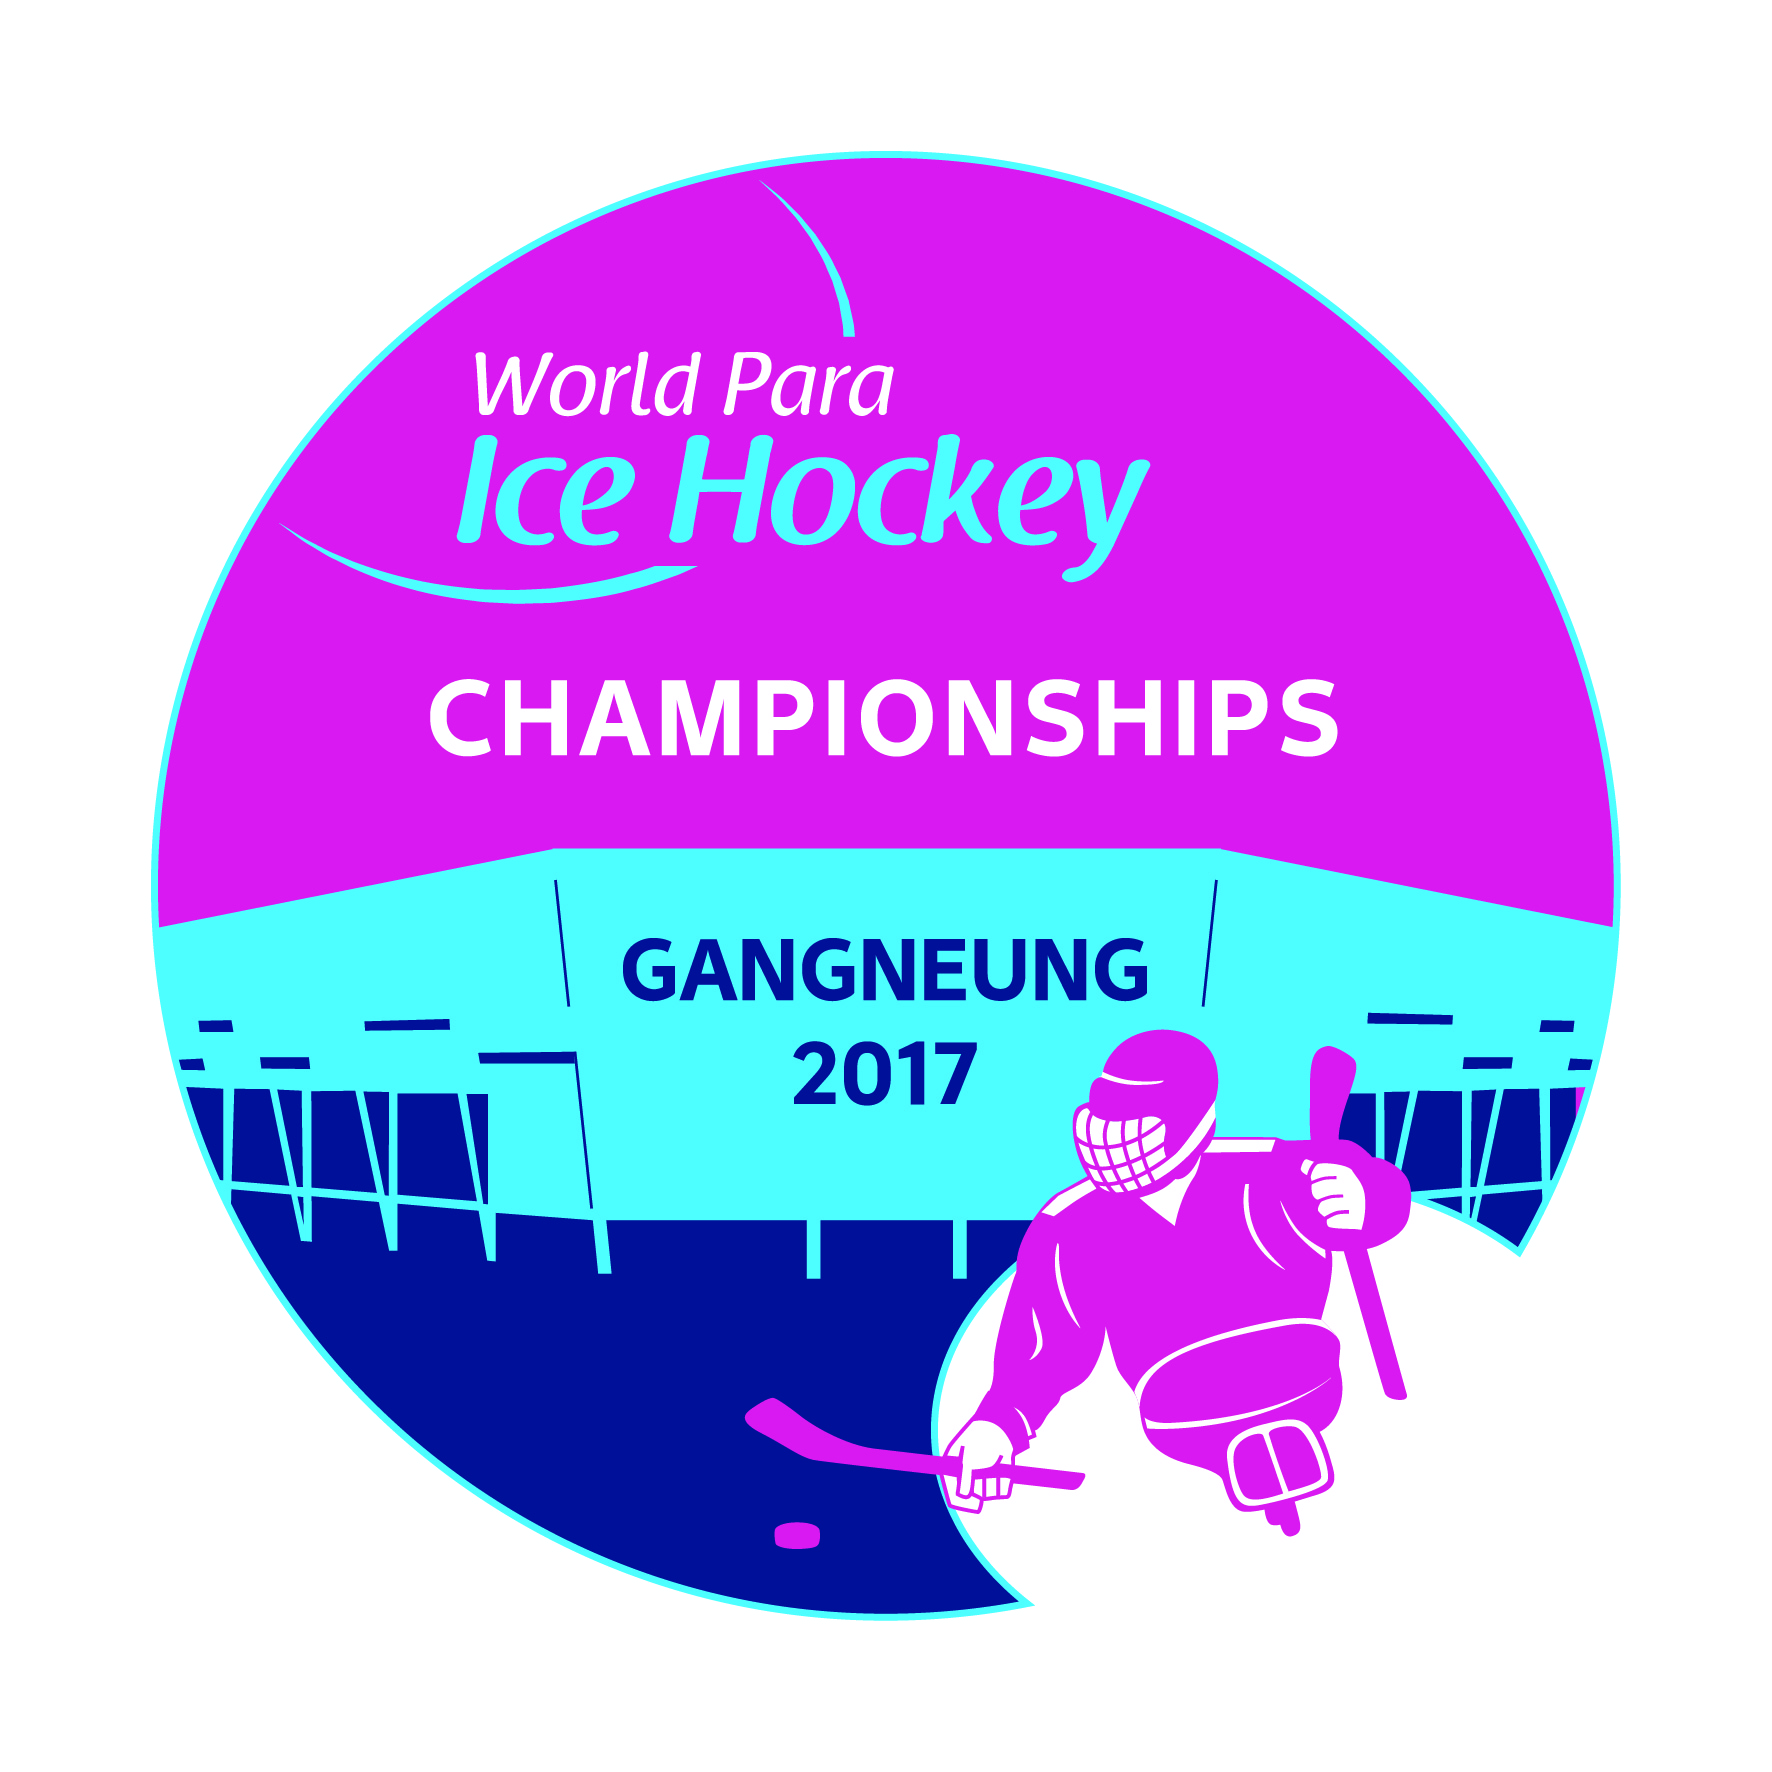 Gangneung 2017 World Para Ice Hockey Championships - logo